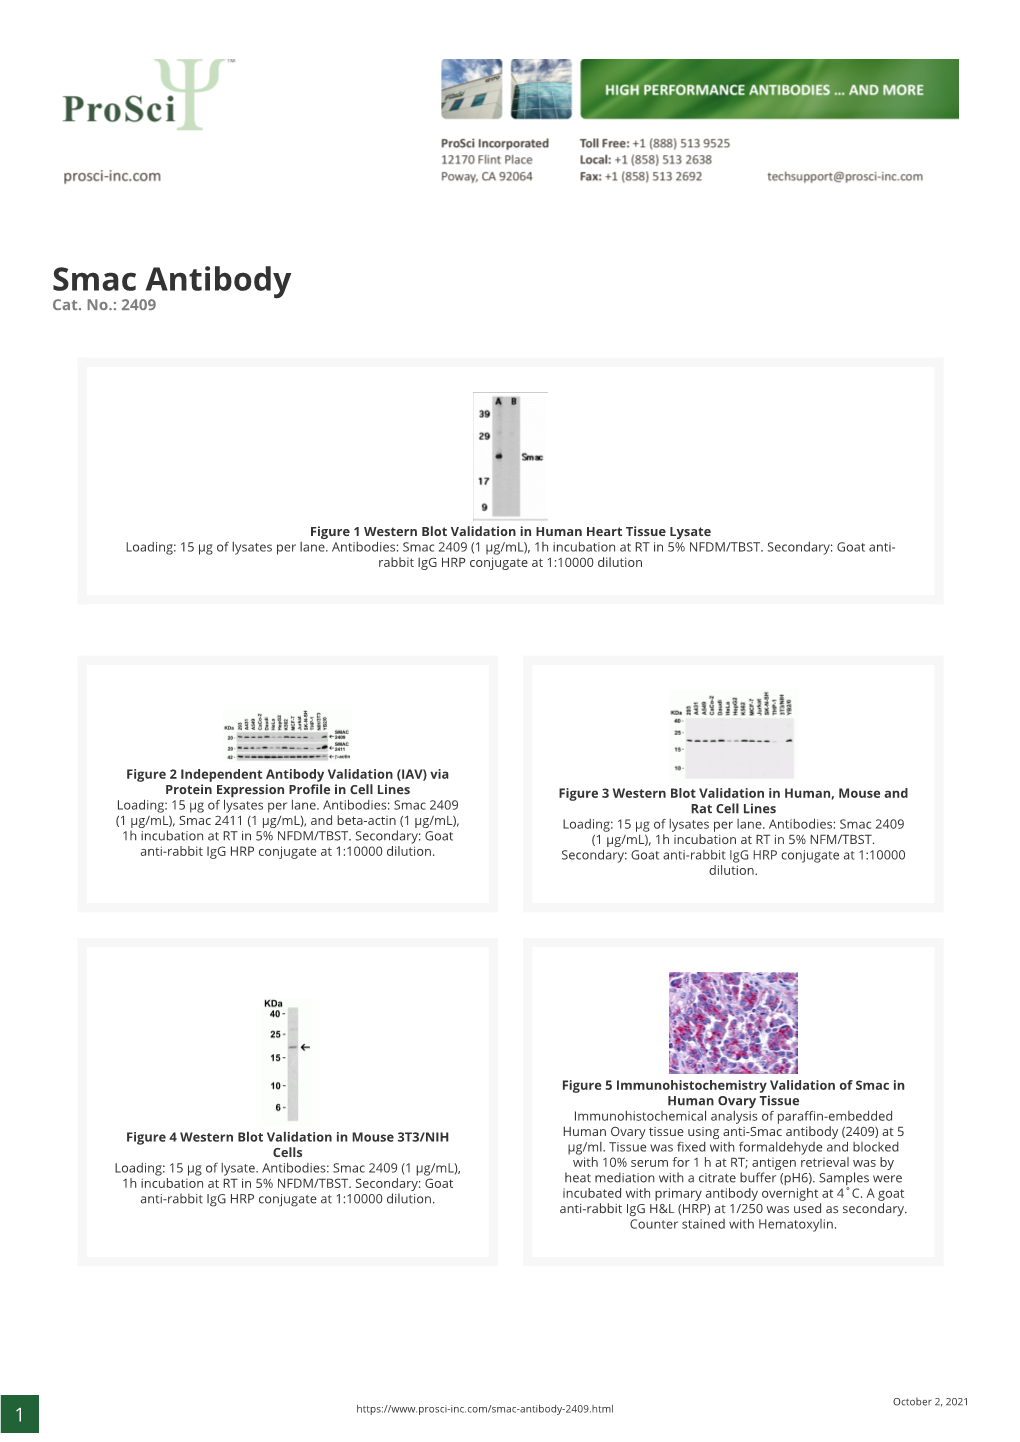 Smac Antibody Cat